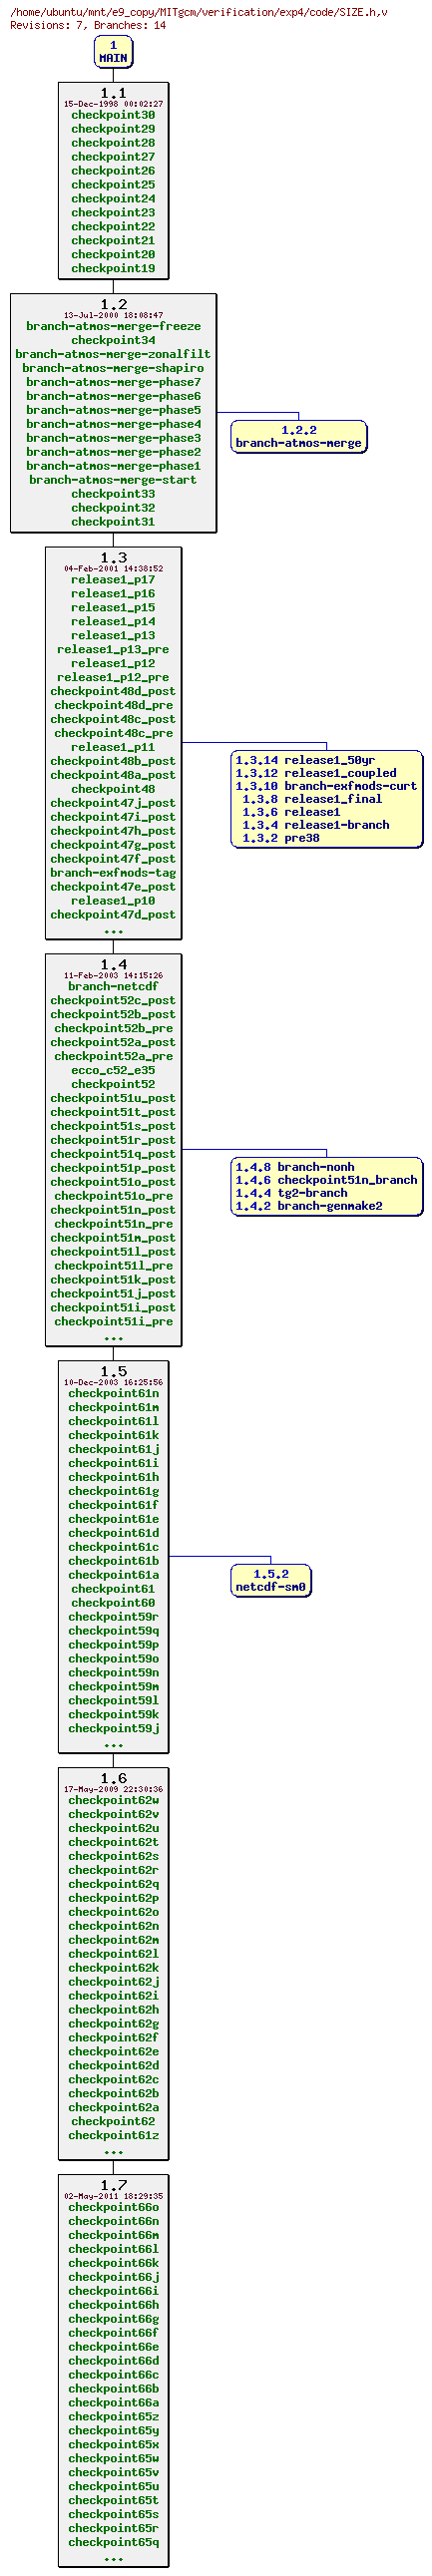 Revisions of MITgcm/verification/exp4/code/SIZE.h